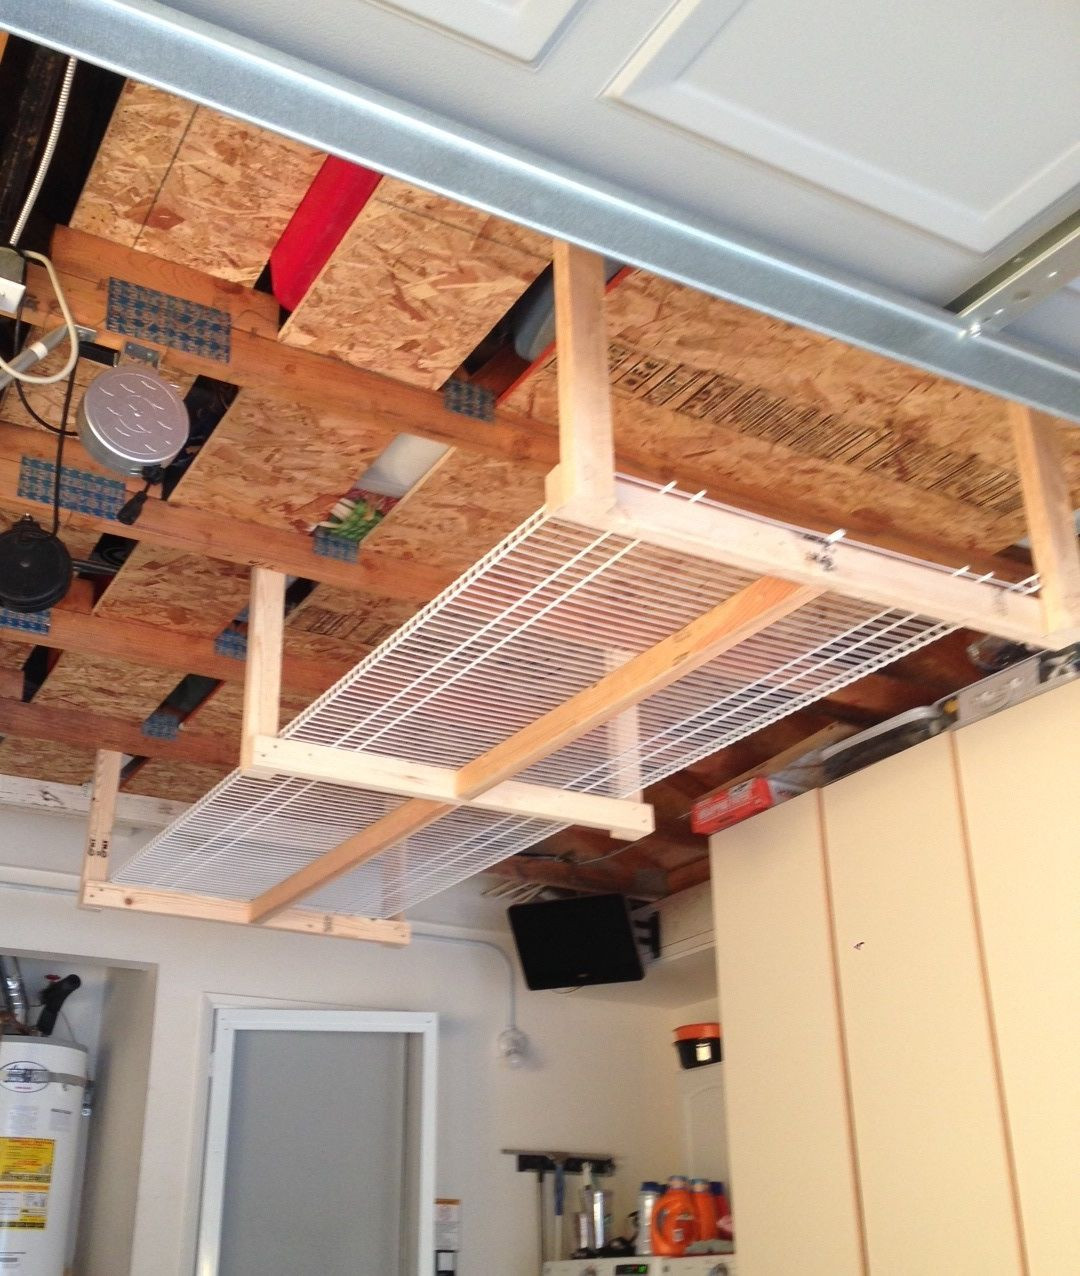 DIY Overhead Garage Storage Plans
 Inspiring Garage Workshop Home Decor Ideas With images